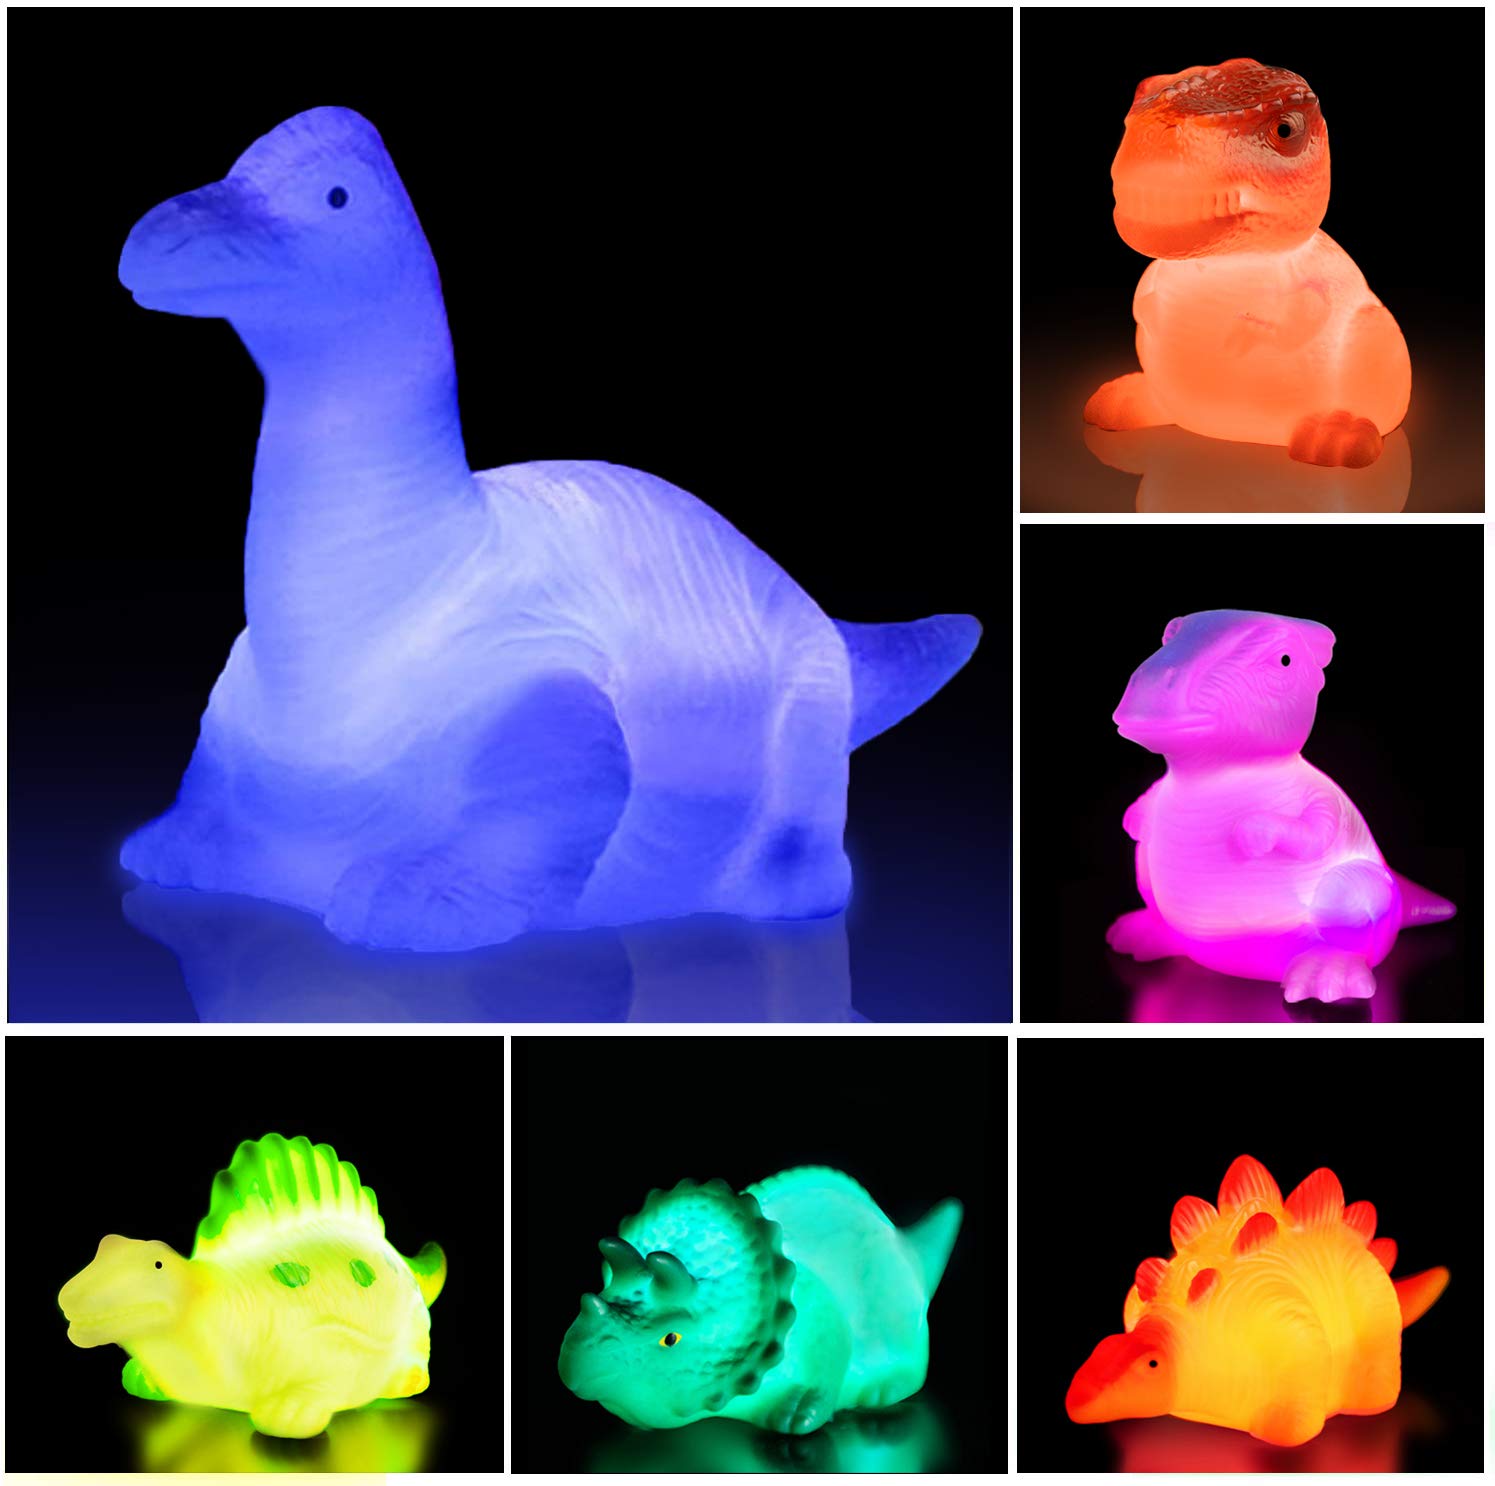 Jomyfant Dinosaur Bath Toys Light Up Floating Rubber Toys(6 Packs),Flashing Color Changing Light in Water,Baby Infants Kids Toddler Child Preschool Bathtub Bathroom